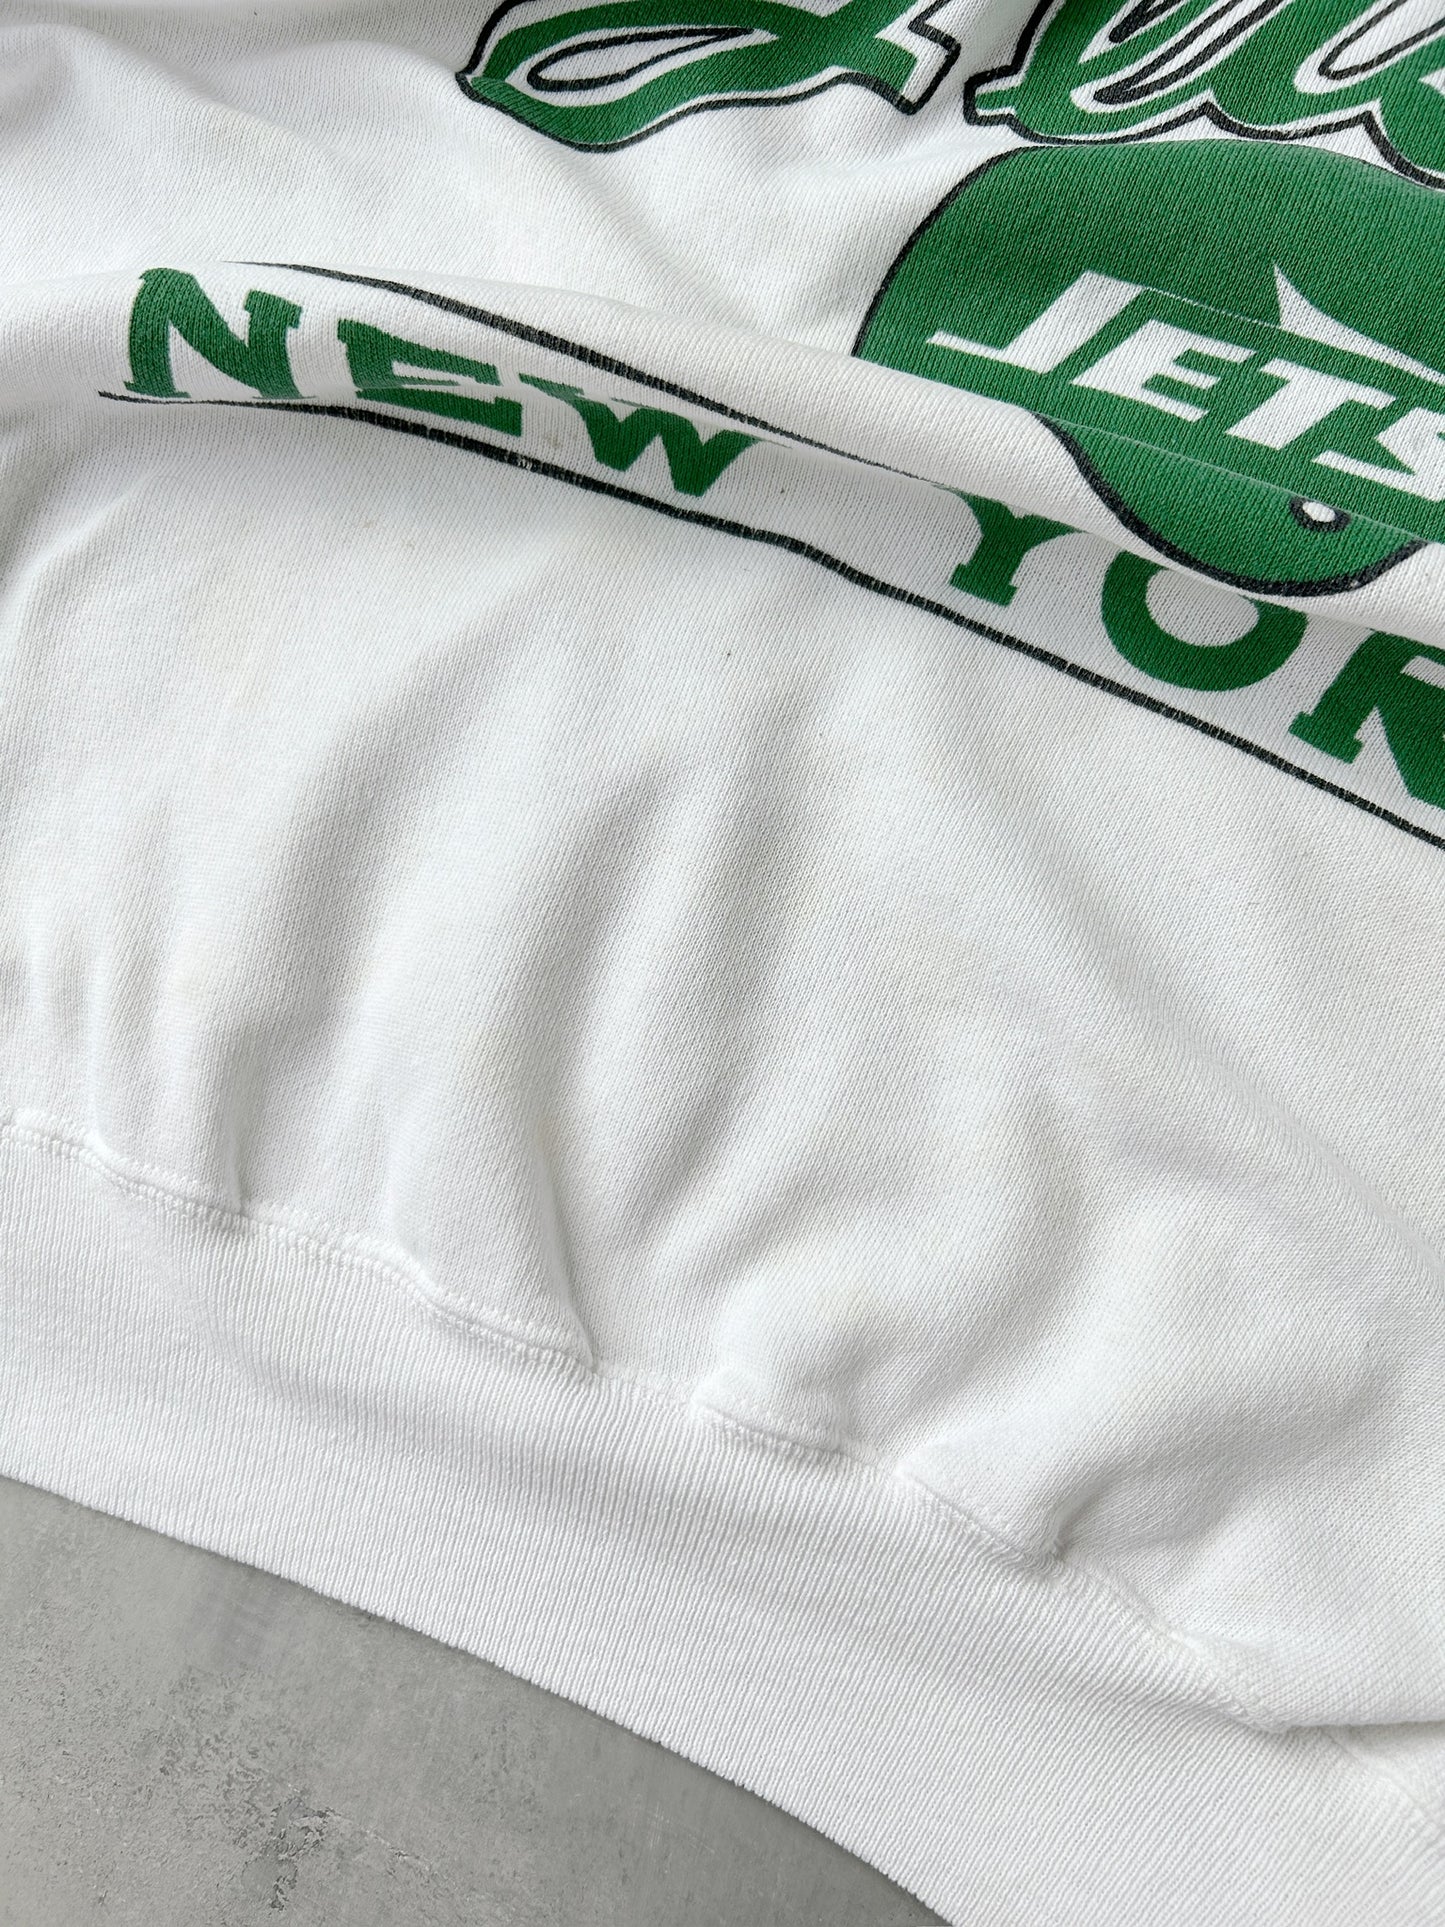 New York Jets Sweatshirt 80's - XL